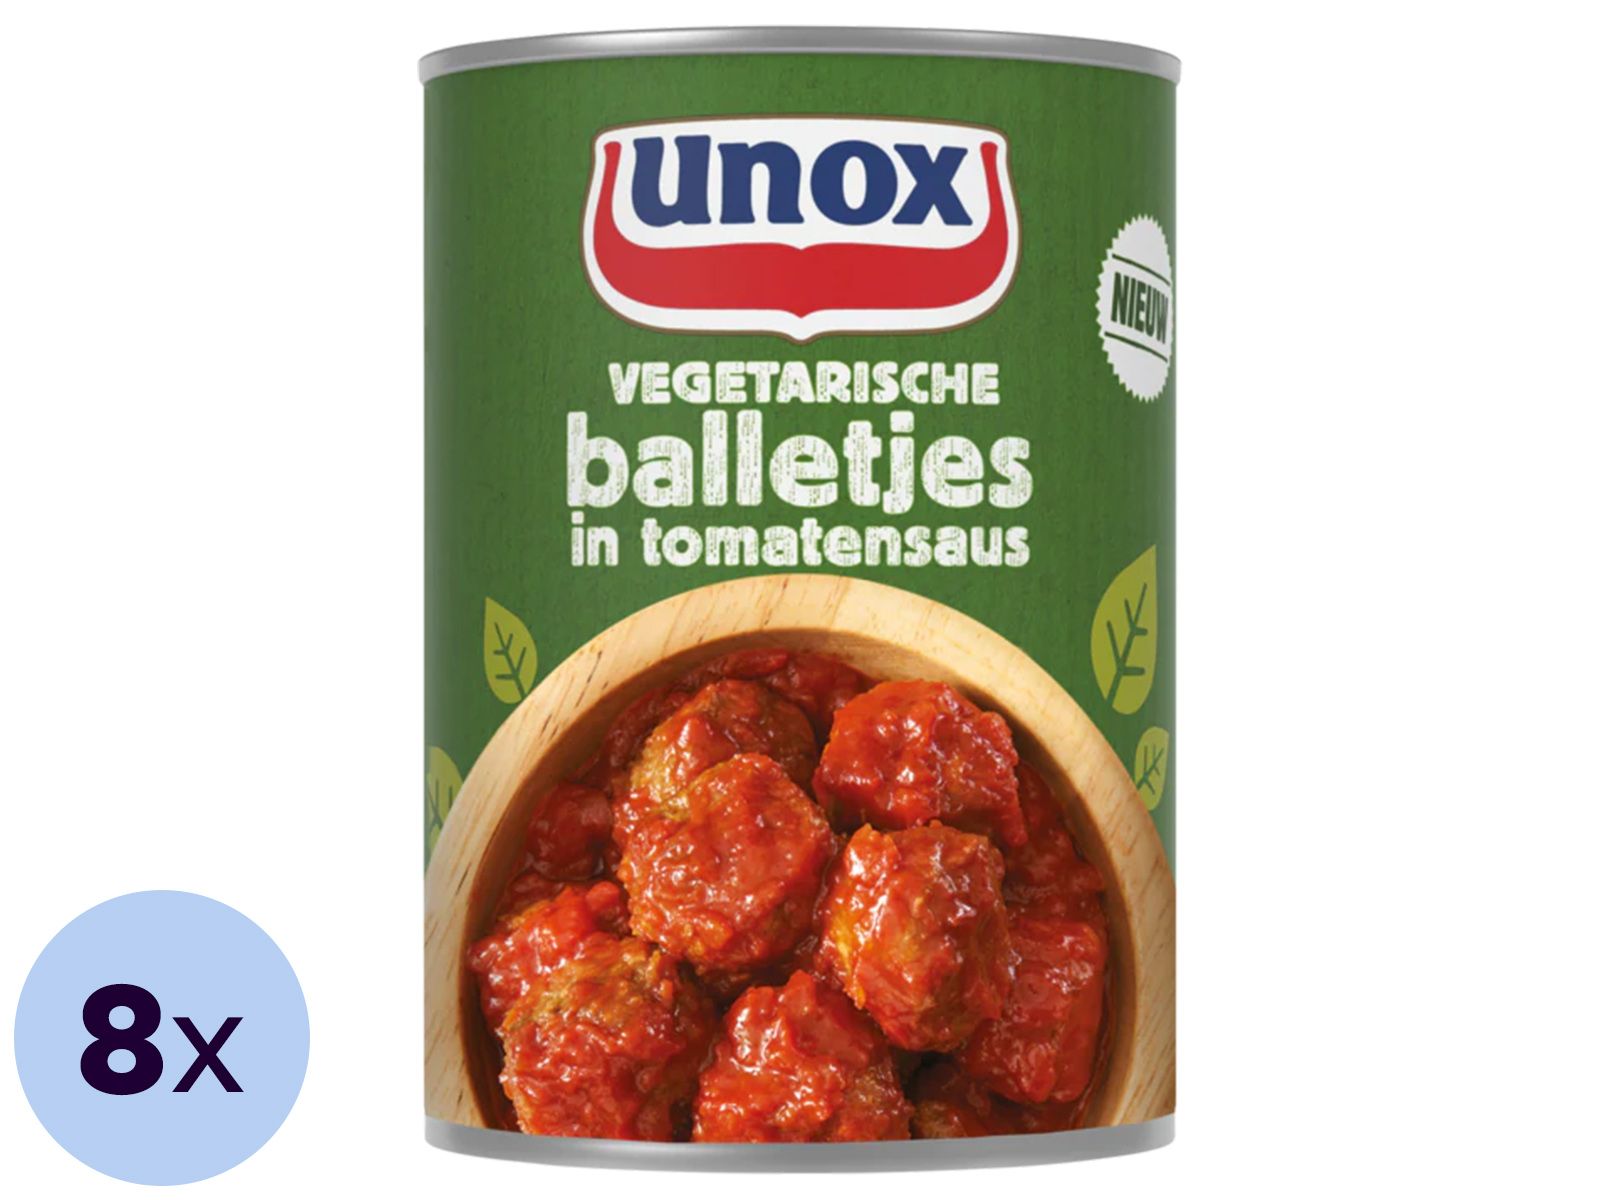 8x-420-g-unox-vega-balletjes-in-tomatensaus